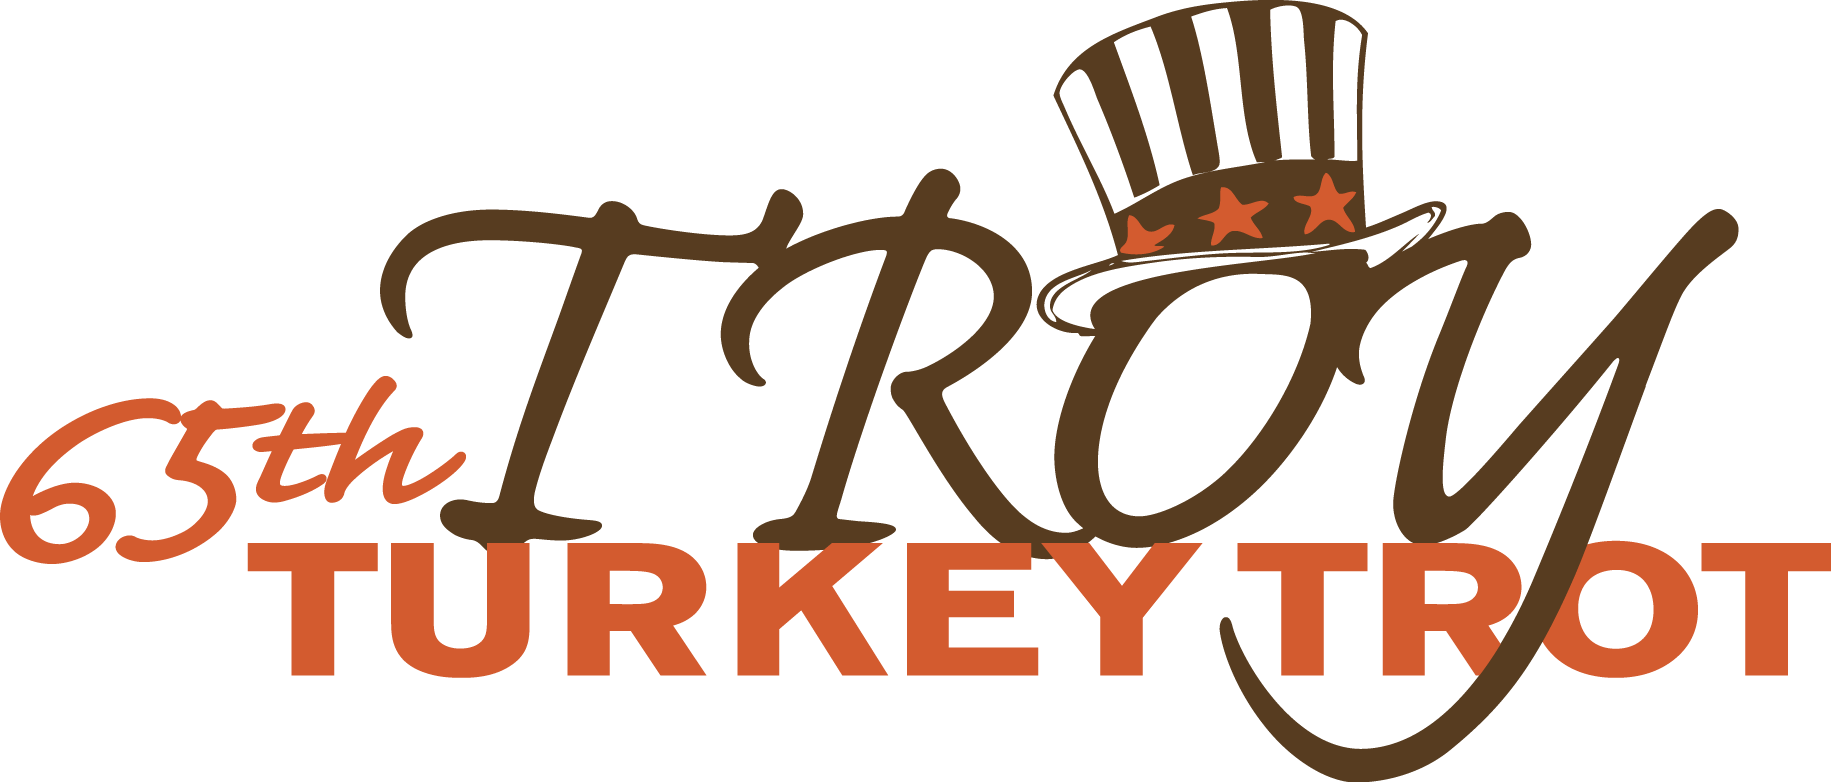 65th Annual Troy Turkey Trot Finisher Certificates - Turkey Trot (1831x782)